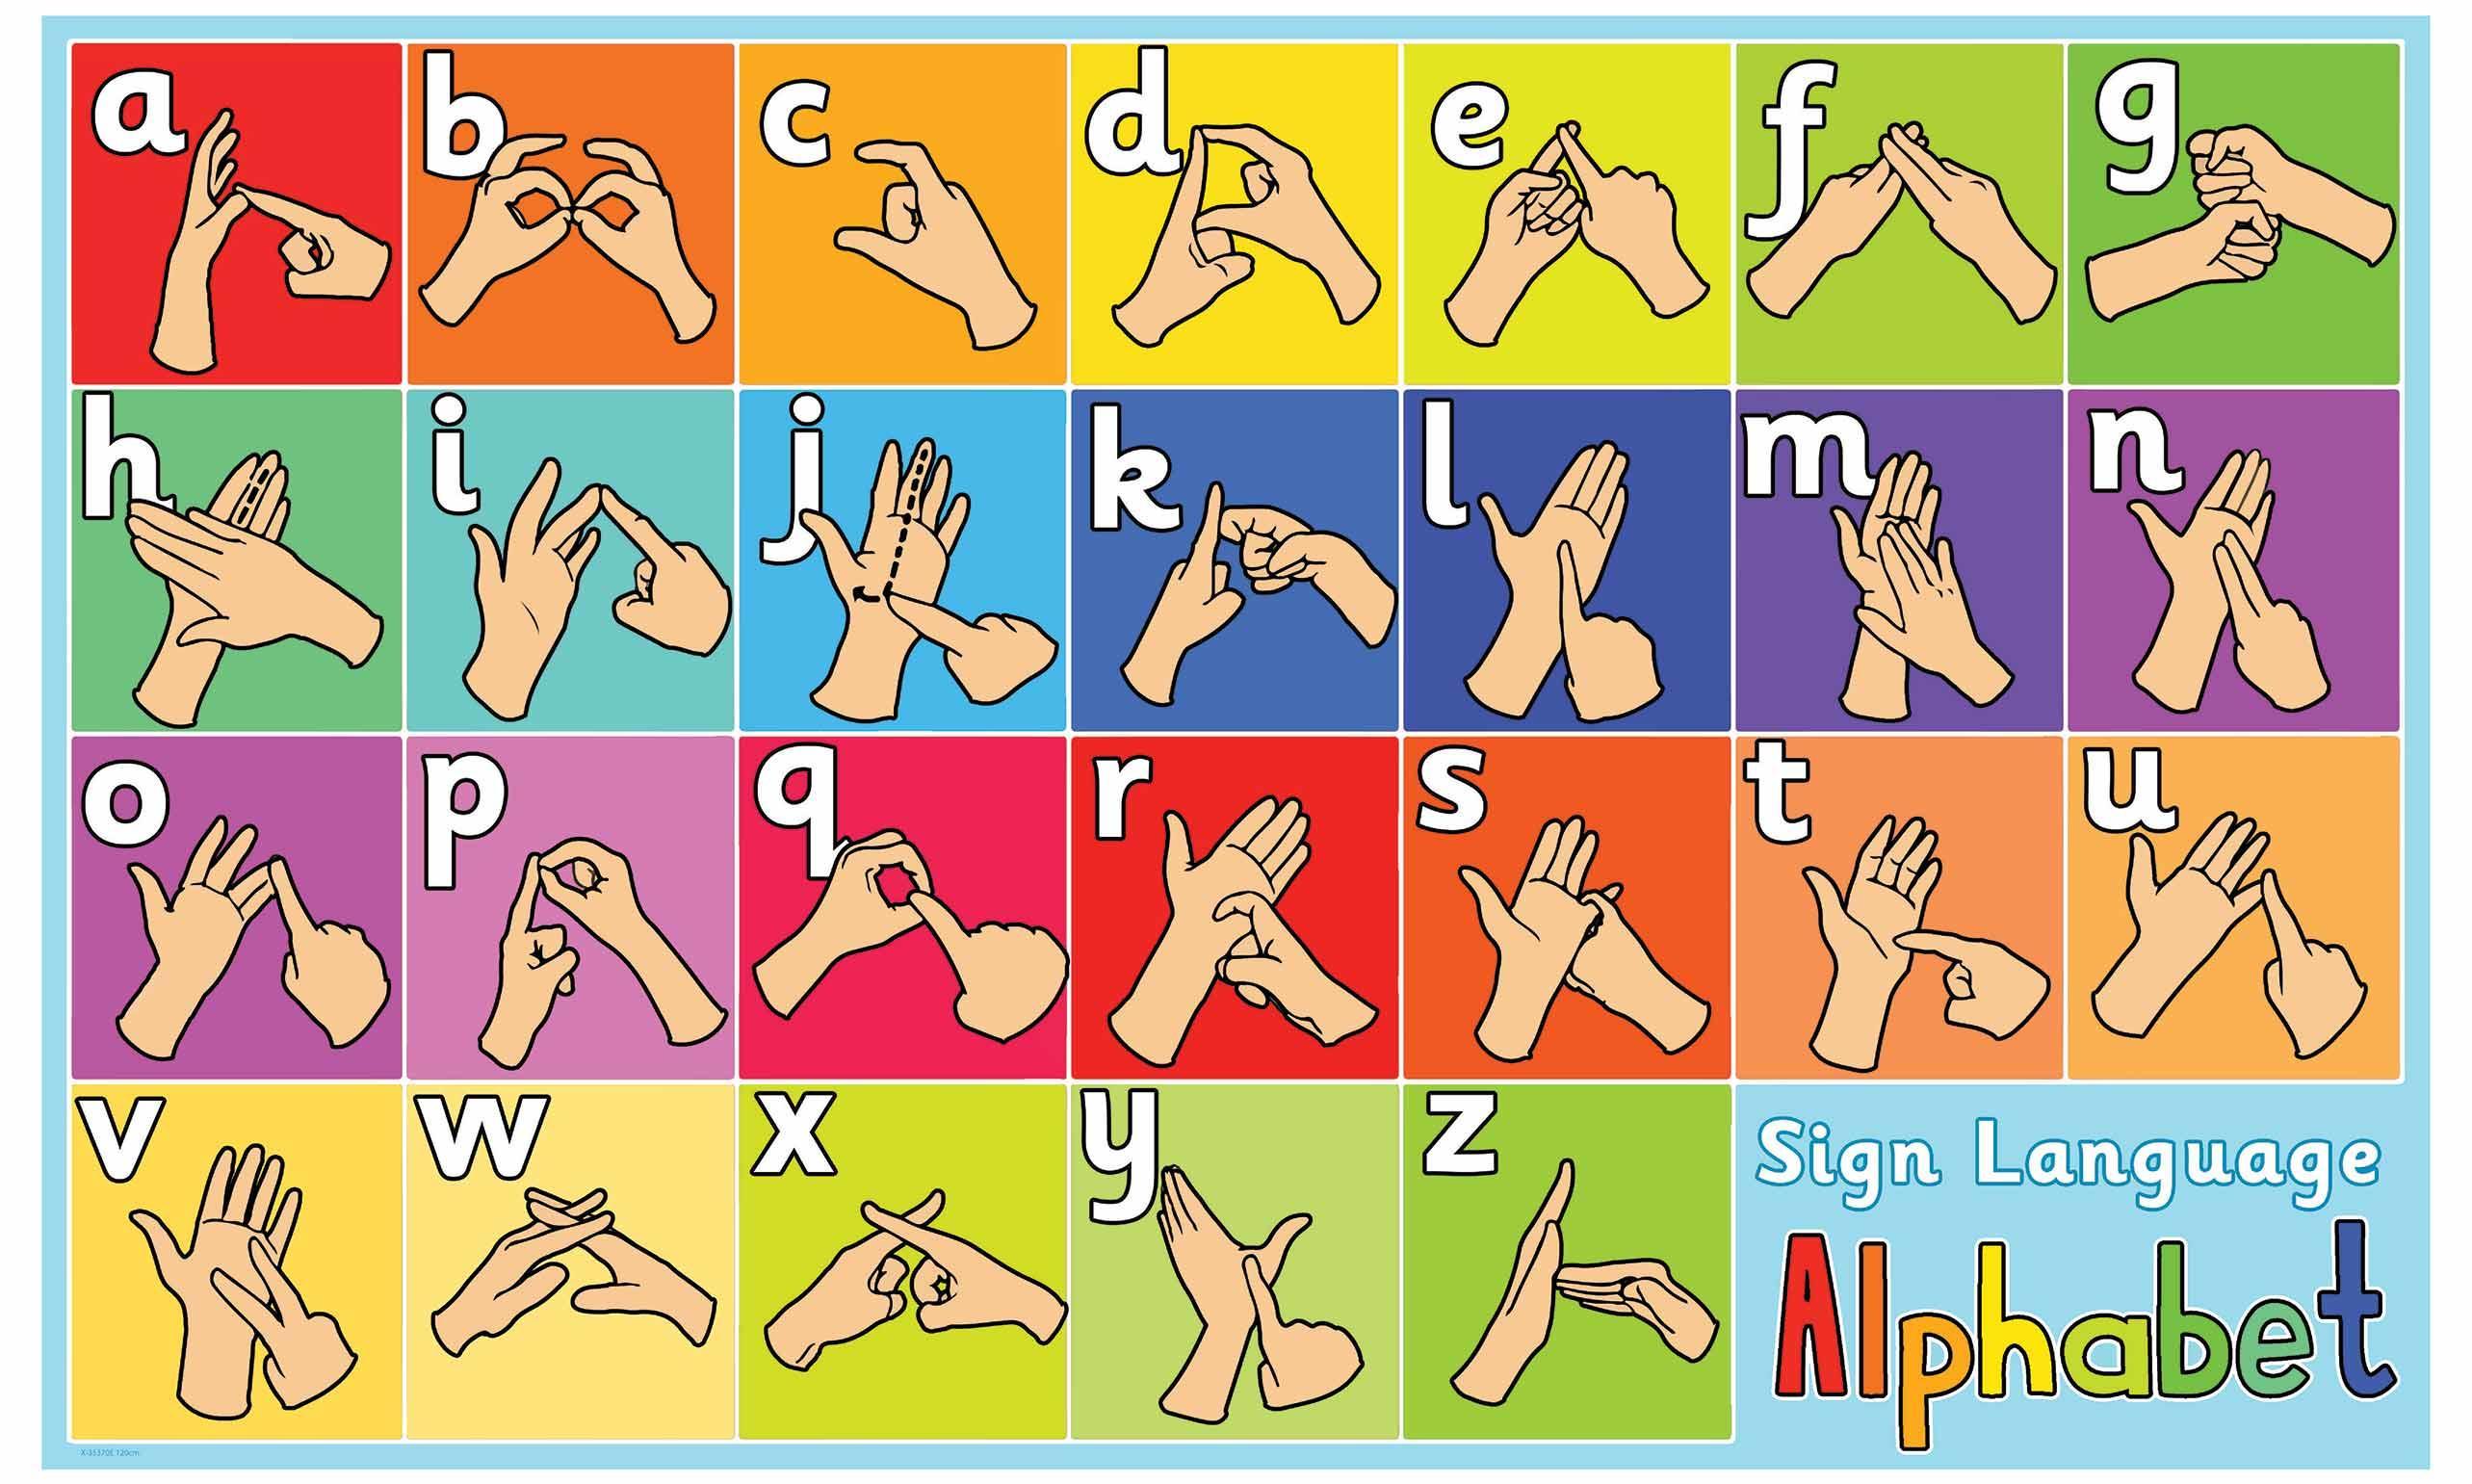 Sign Language Sign